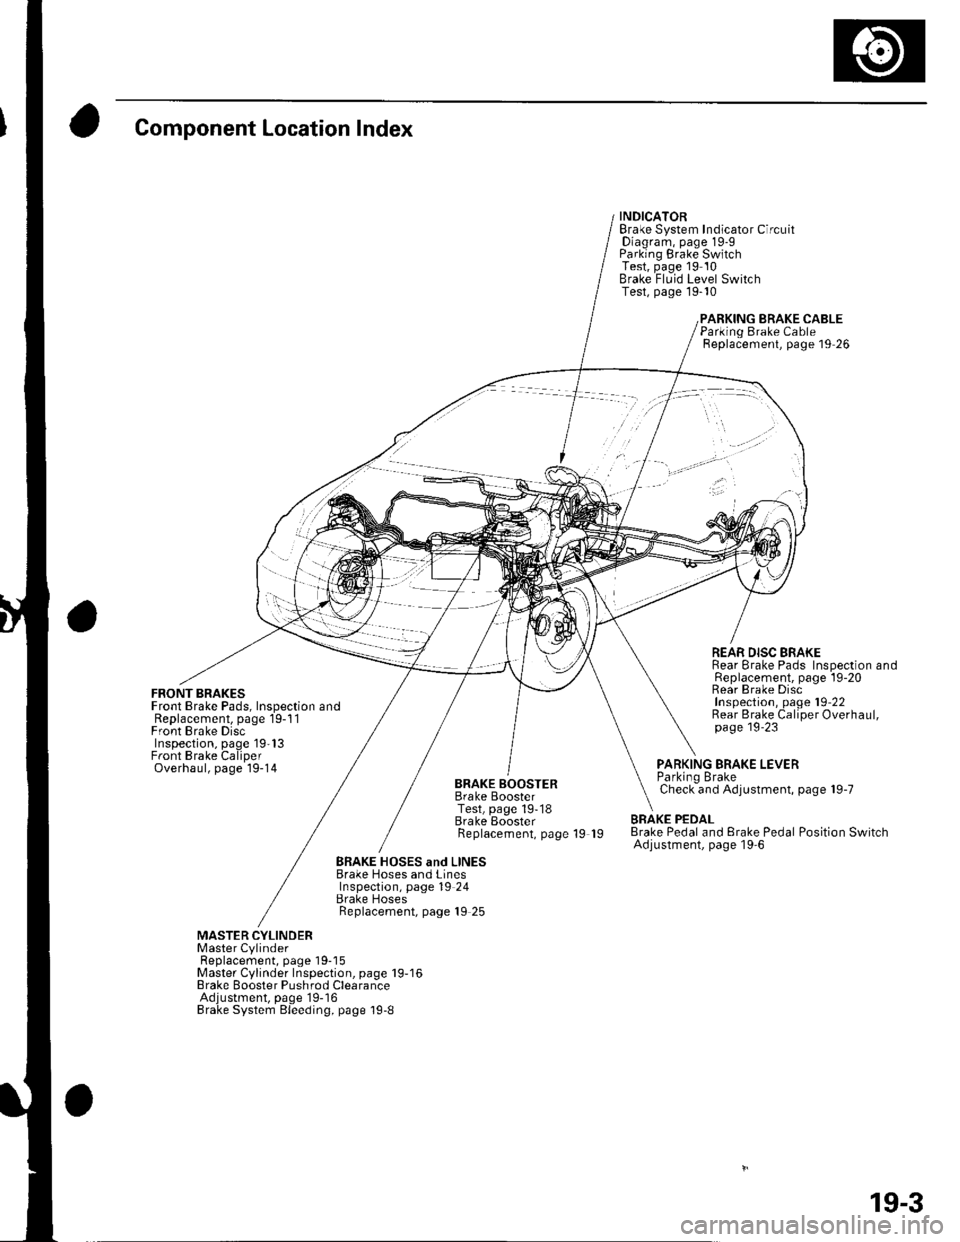 HONDA CIVIC 2003 7.G Workshop Manual Component Location Index
FRONT BRAKESFront Brake Pads, Inspection andReplacement, page 19-1 1Front Brake DiscInspection, page 1913Front Brake CaliperOverhaul, page 19-14
INDICATORBrake System Indicat